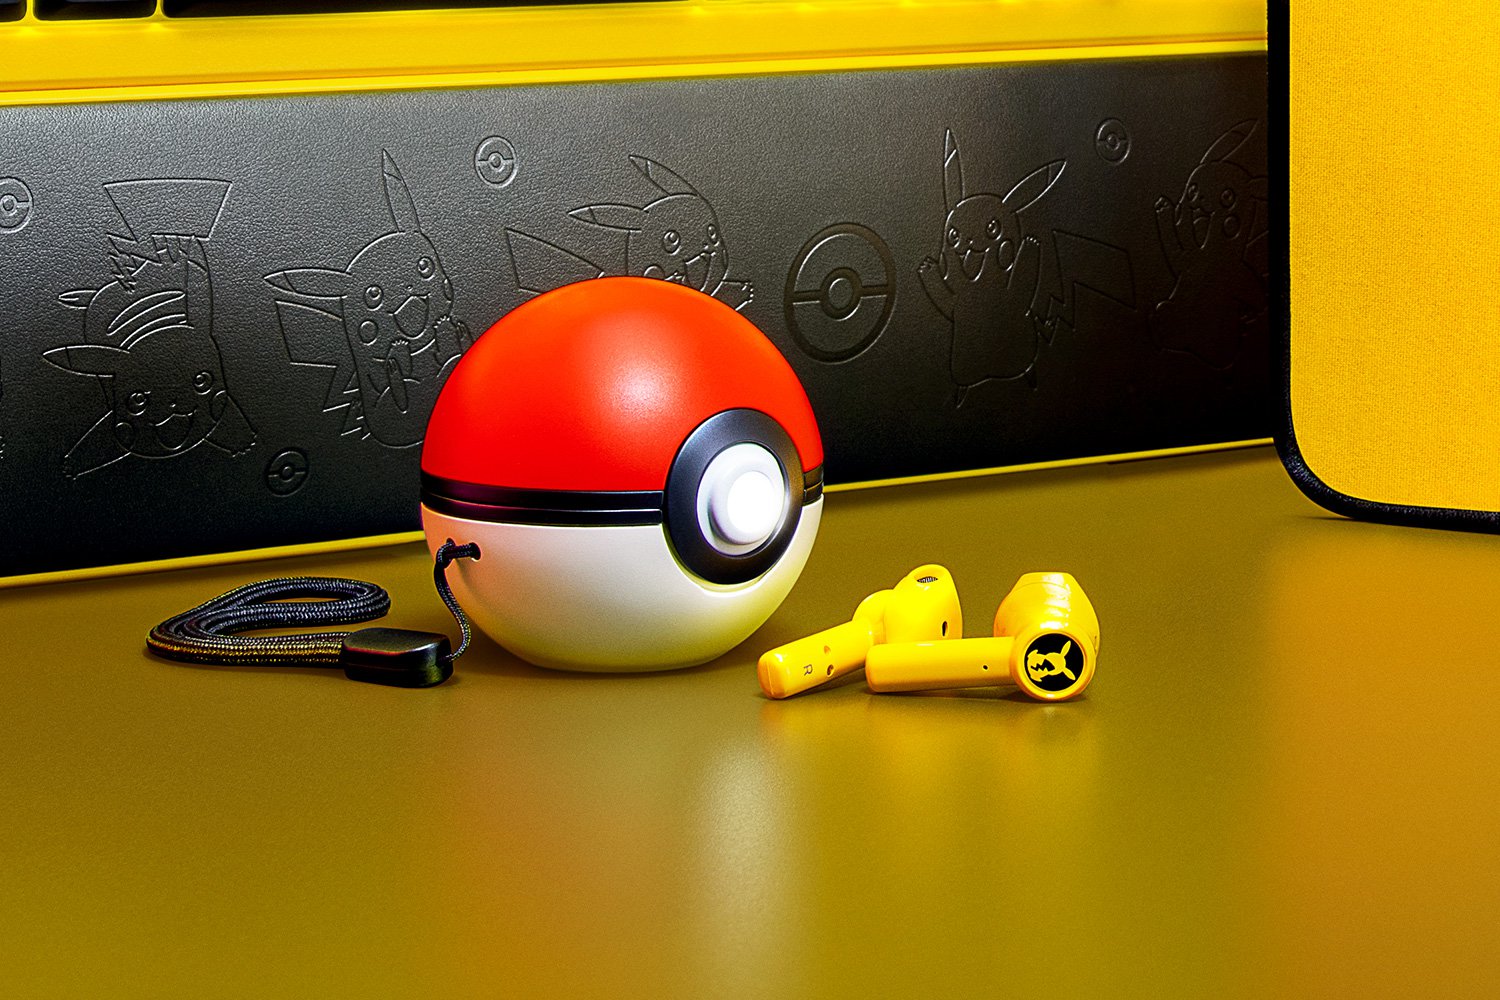 Pikachu Limited Edition True Wireless Earbuds